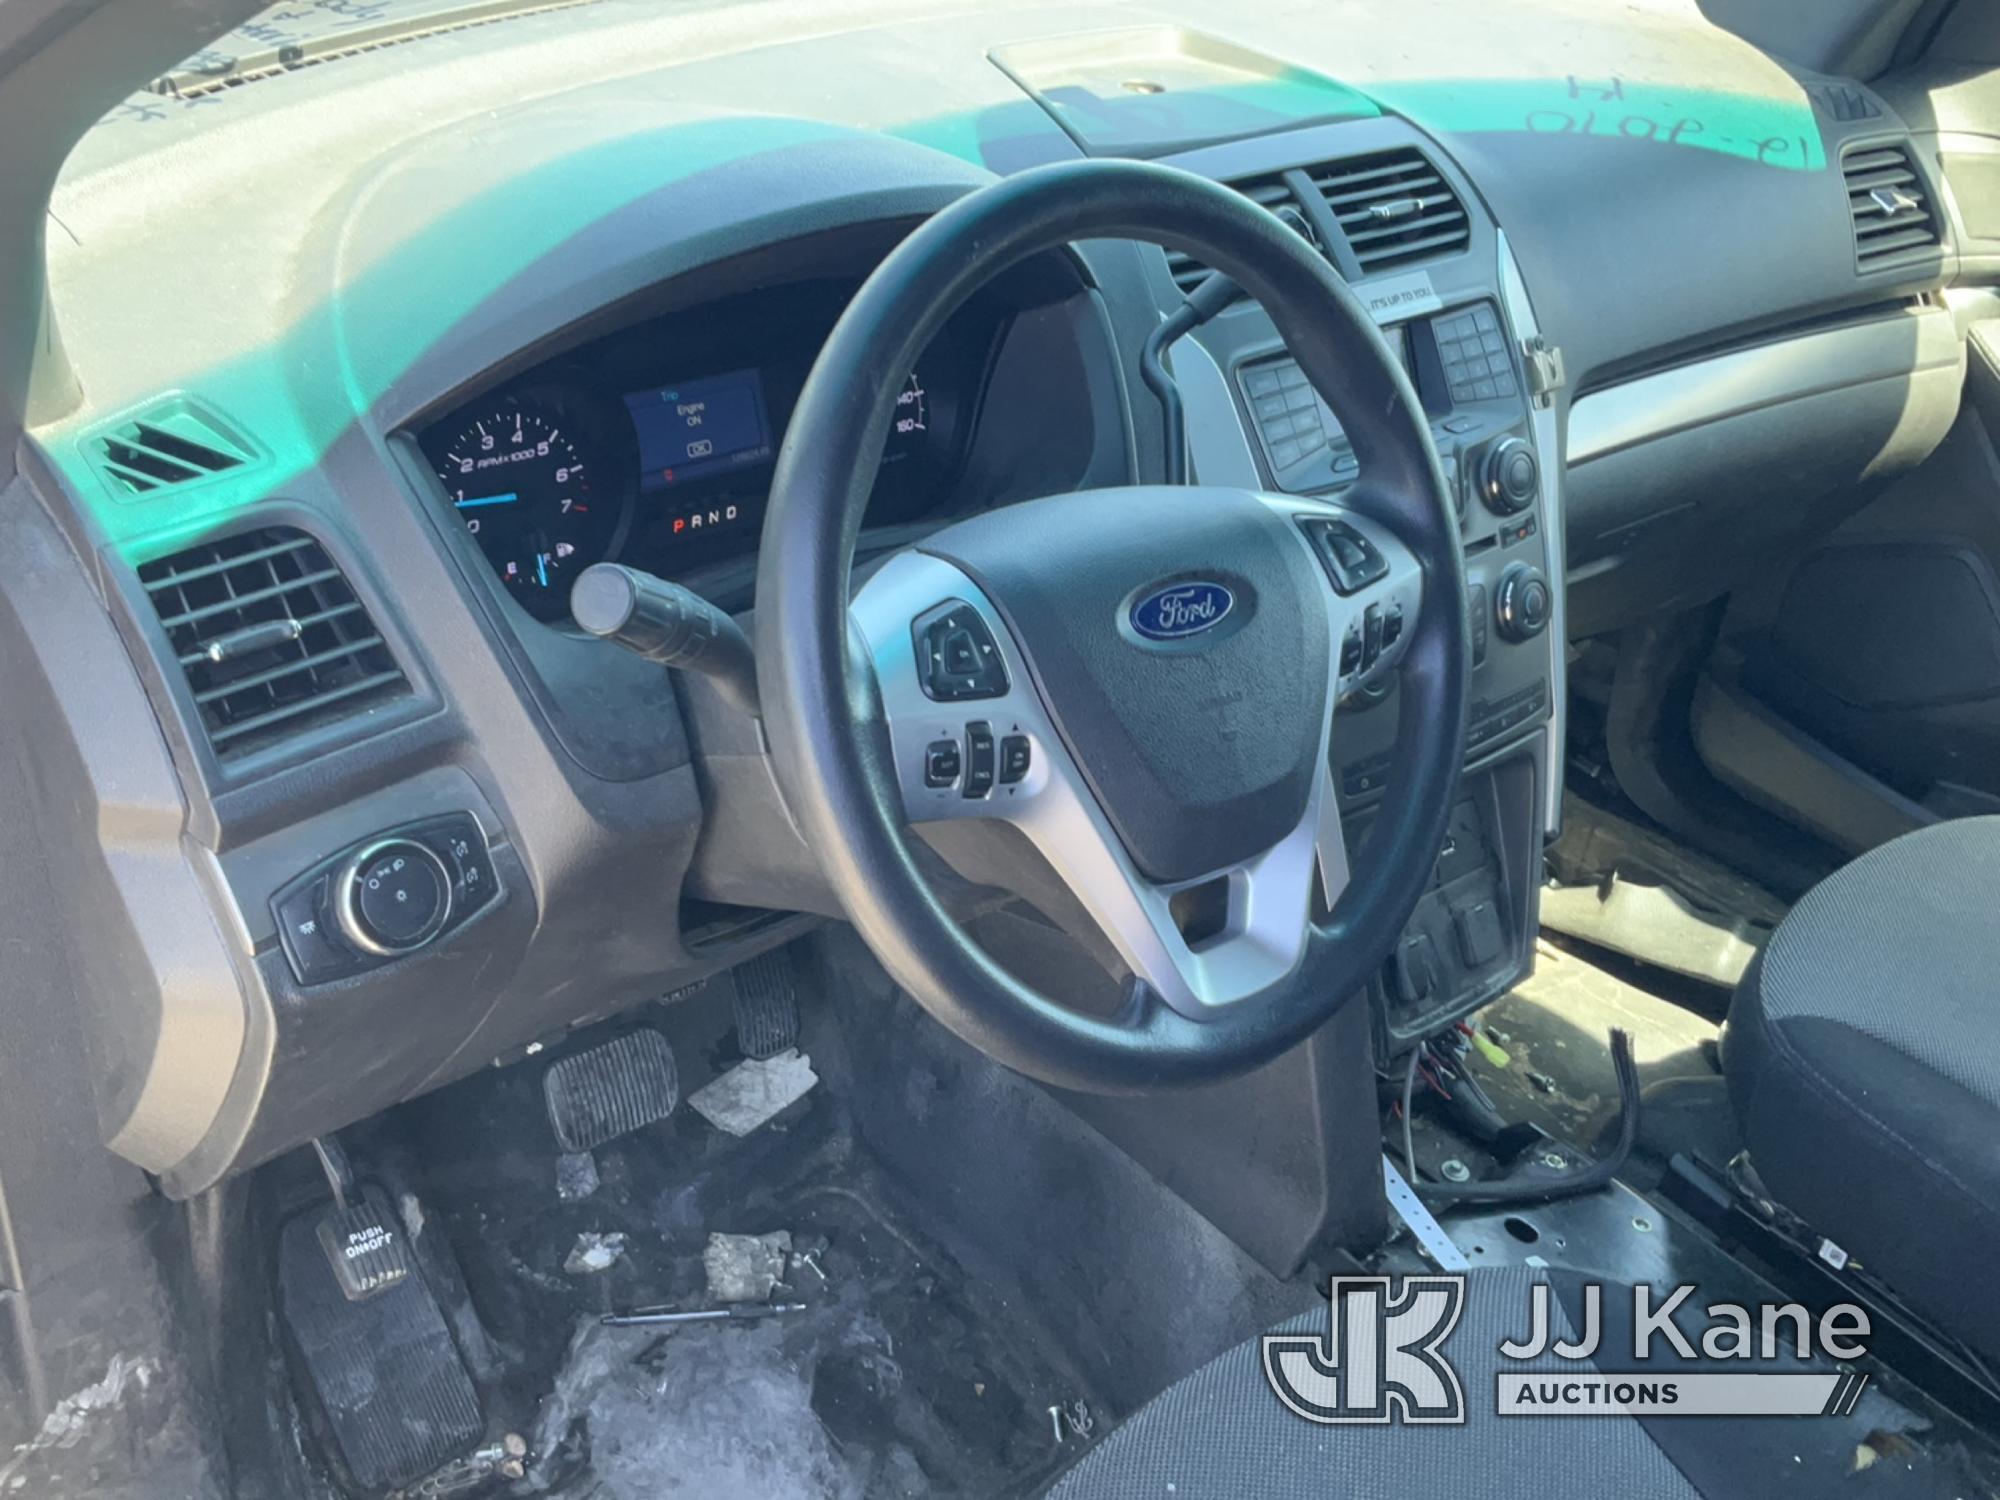 (Las Vegas, NV) 2014 Ford Explorer AWD Police Interceptor Body & Interior Damage, No Console, Rear S